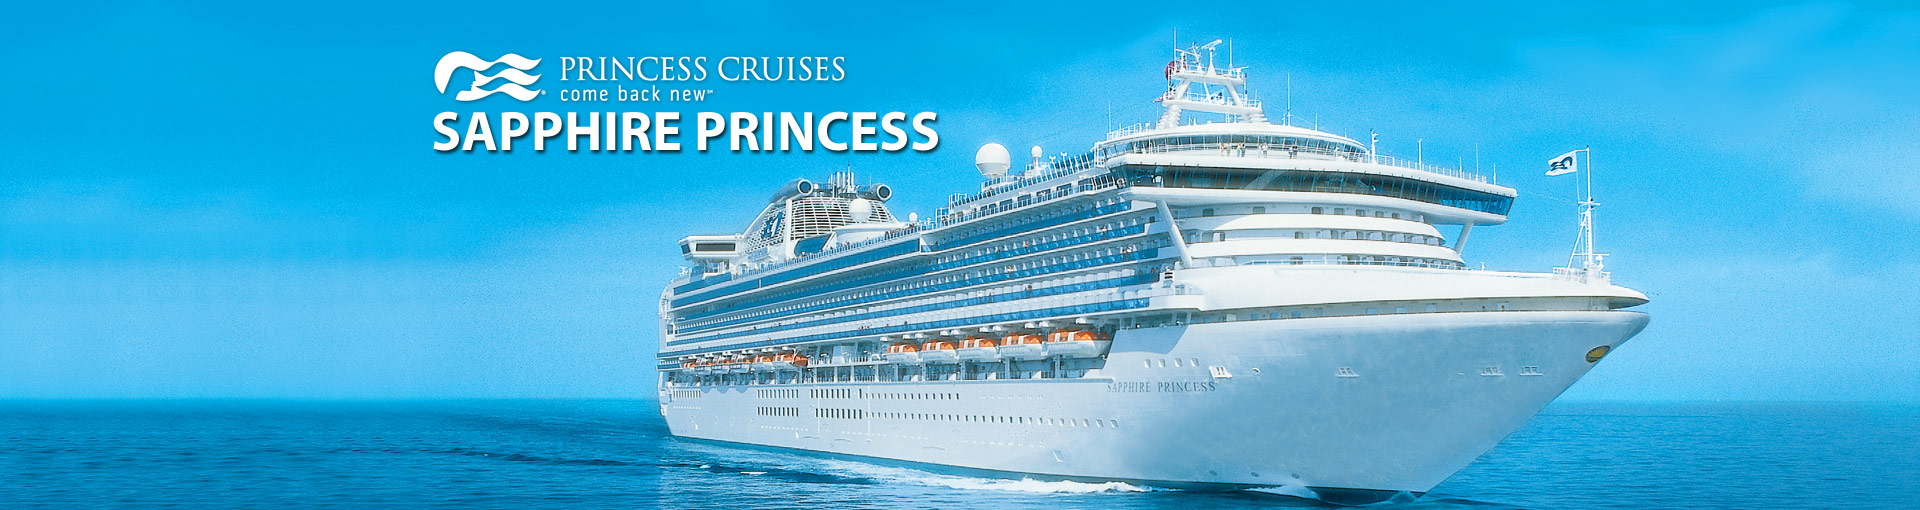 princess-cruises-sapphire-princess-cruise-ship-banner